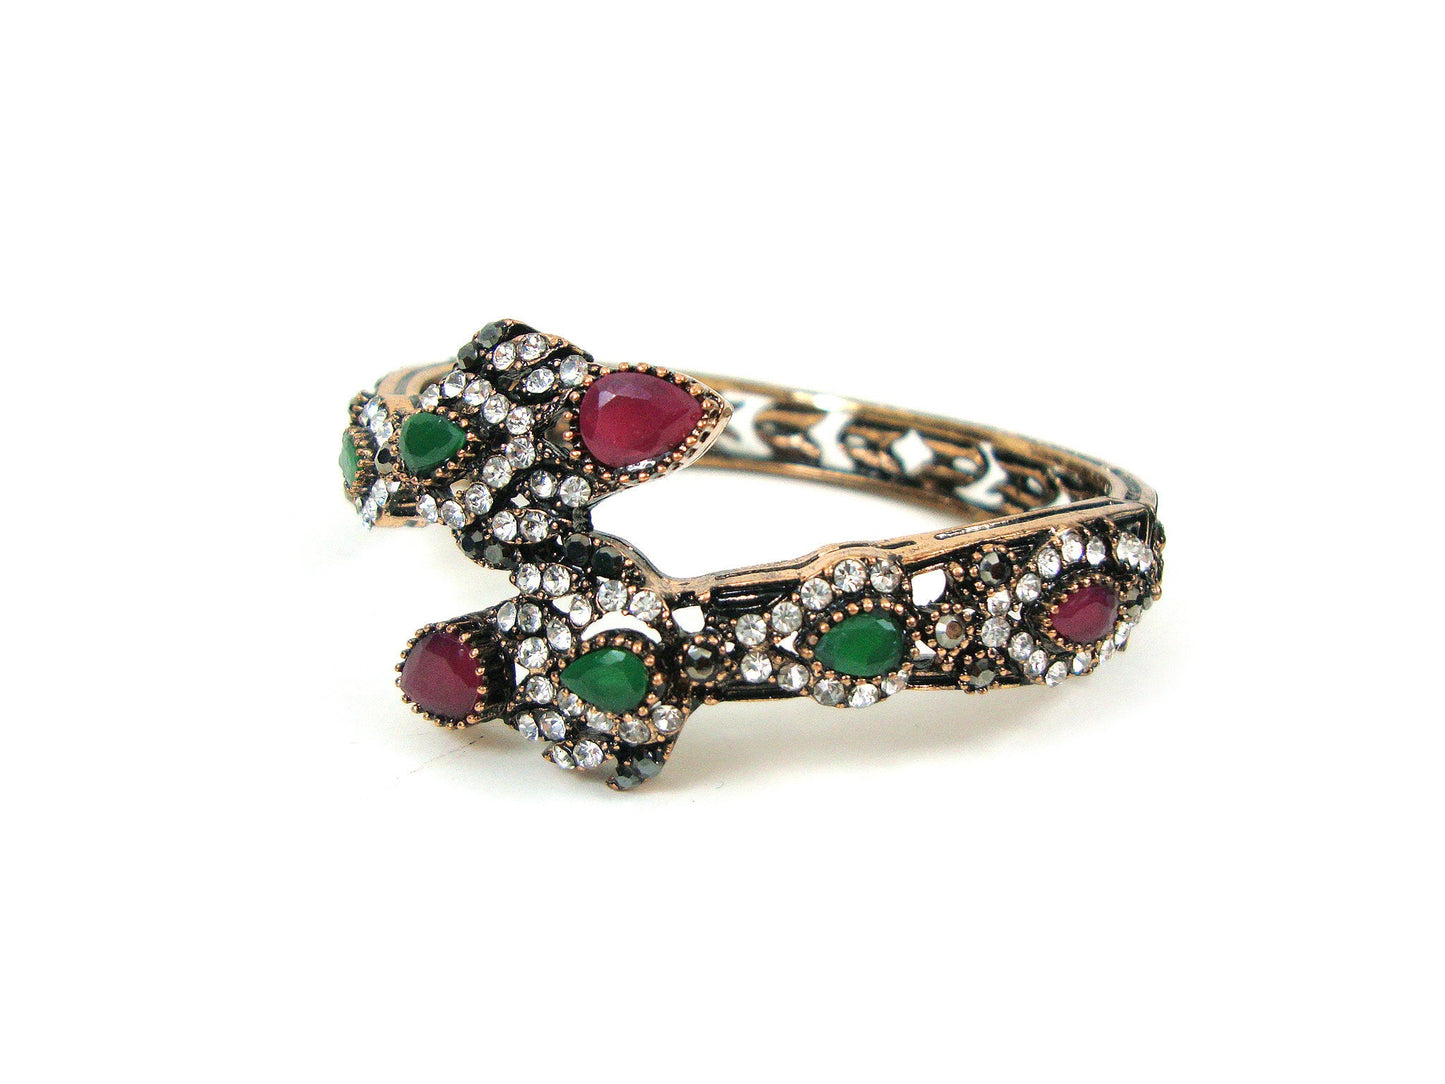 Byzantine Bangle Bracelet Snake Style Ethnic Style, Byzantine Bracelet, Turkish Bracelet, Turkish Jewelry, Traditional , Antique Bracelet